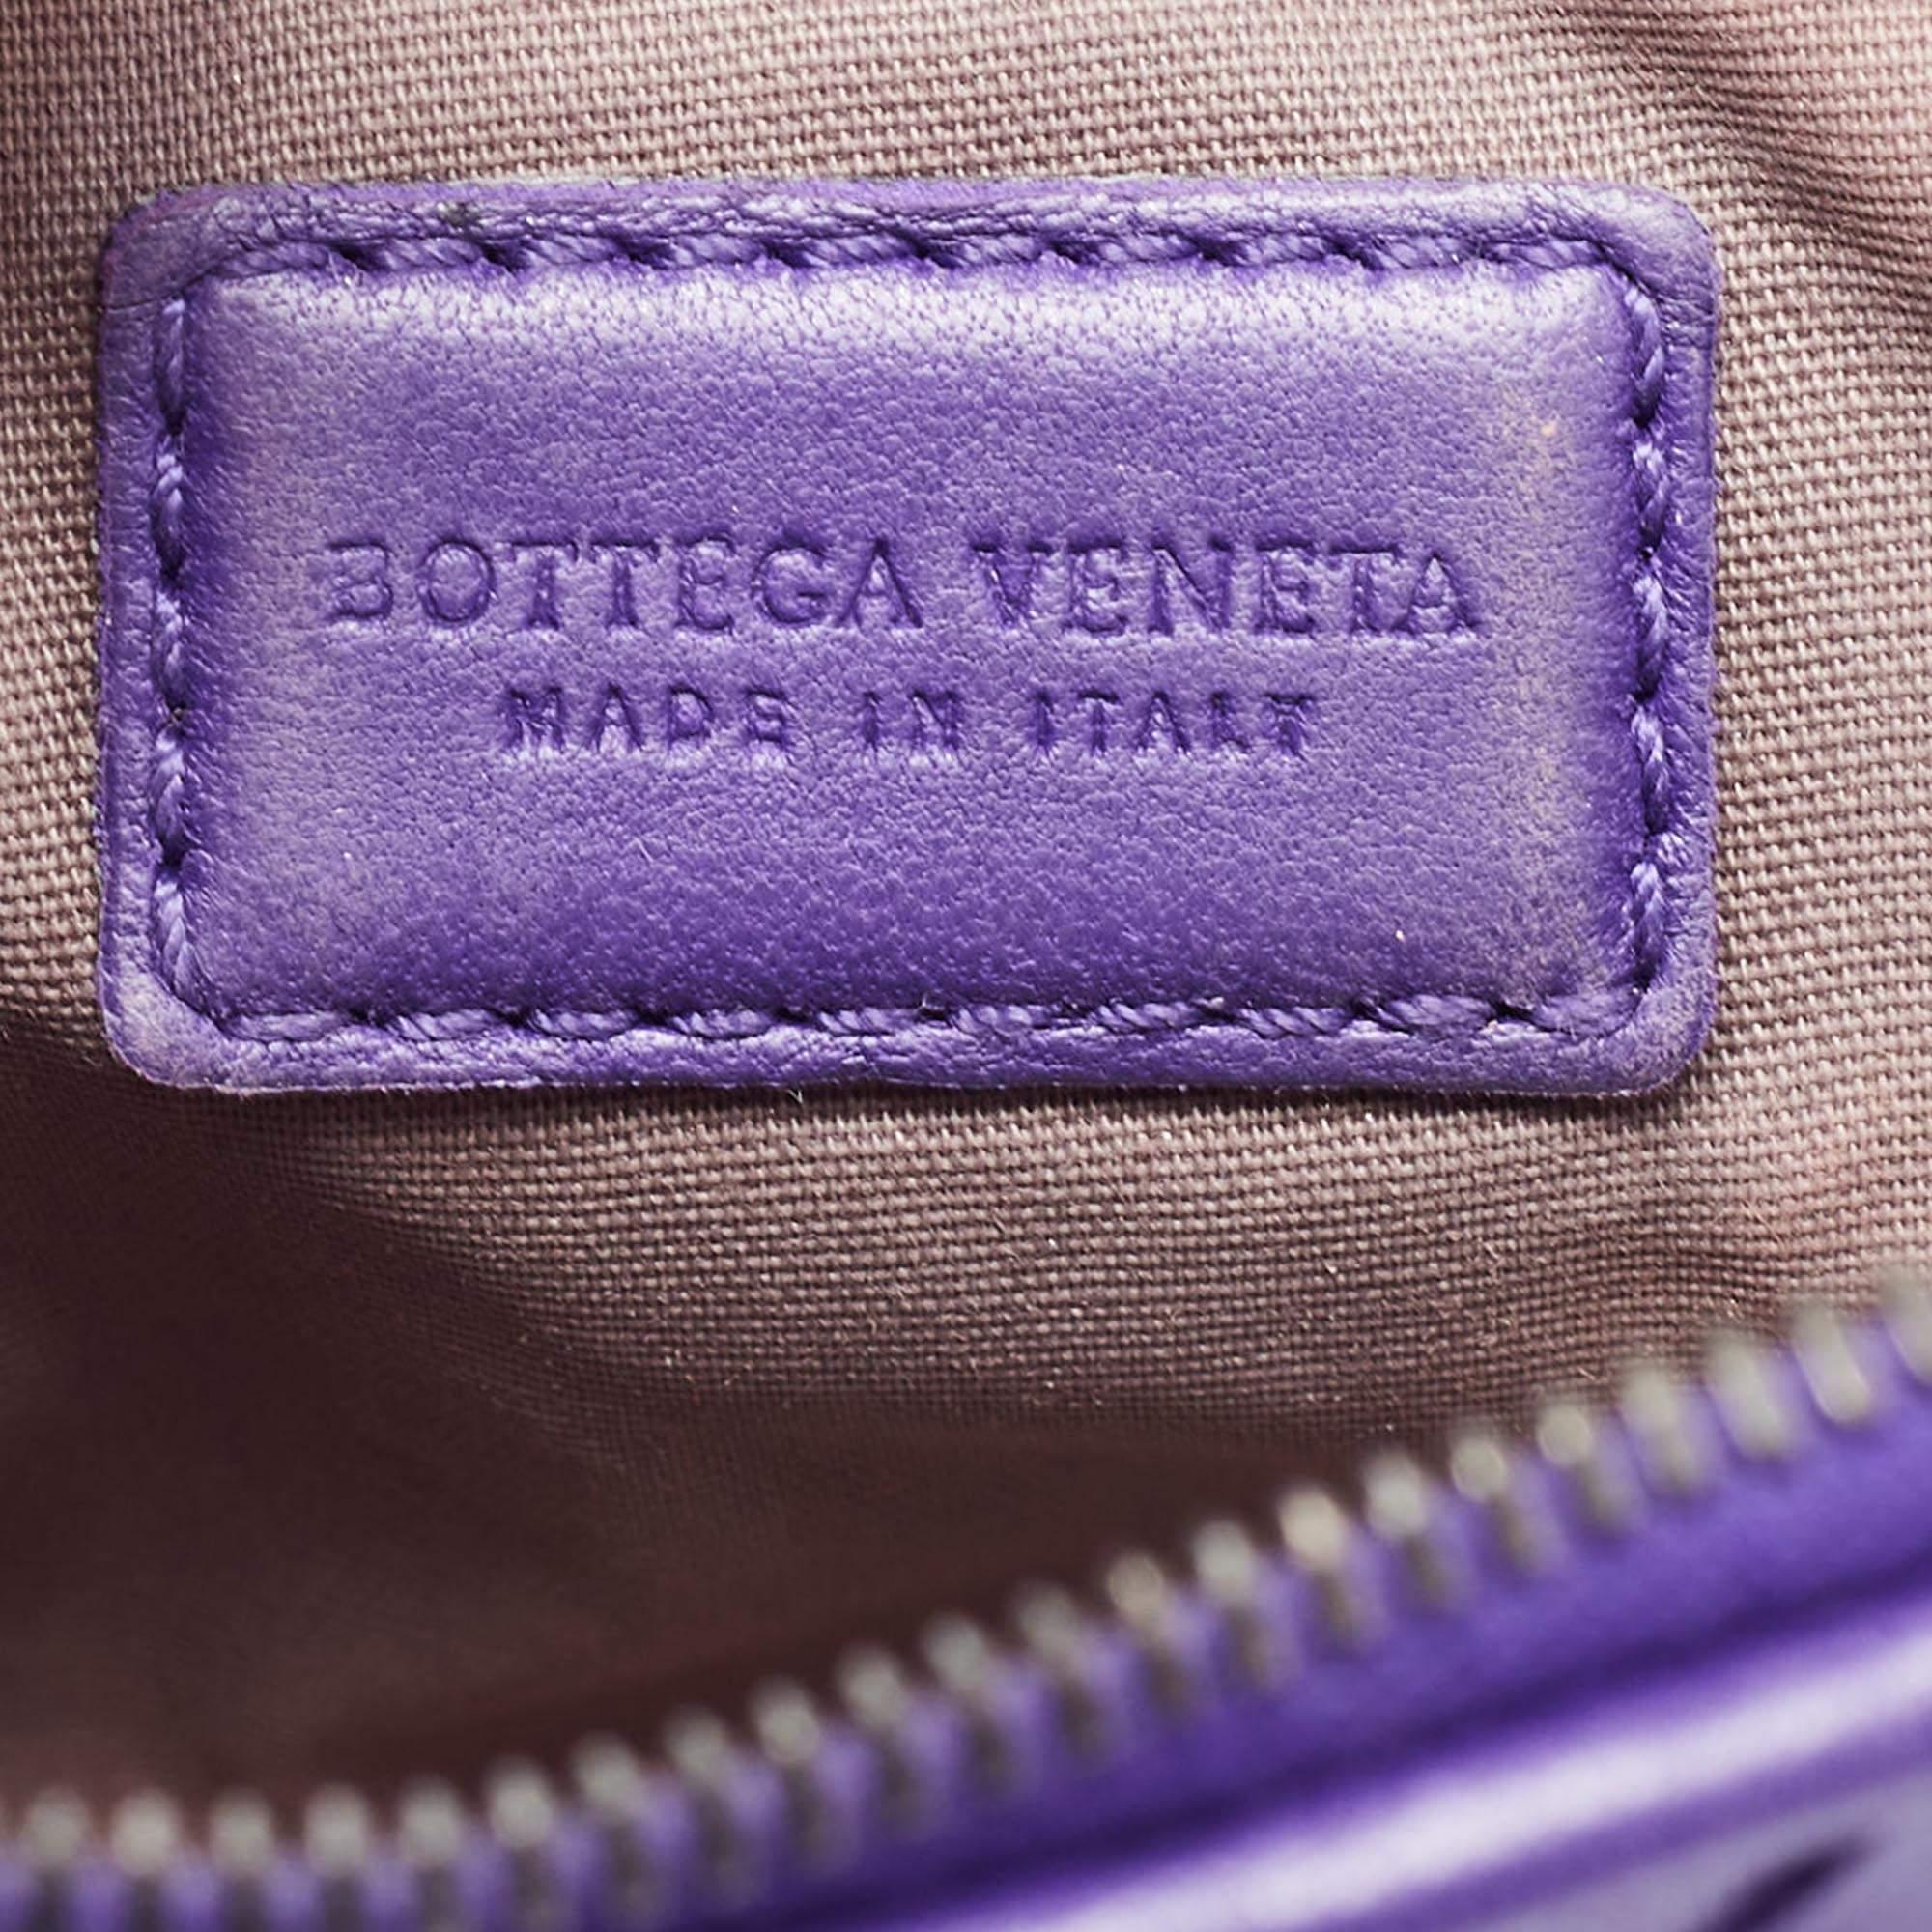 Bottega Veneta Purple Intrecciato Leather Zip Purse For Sale 2